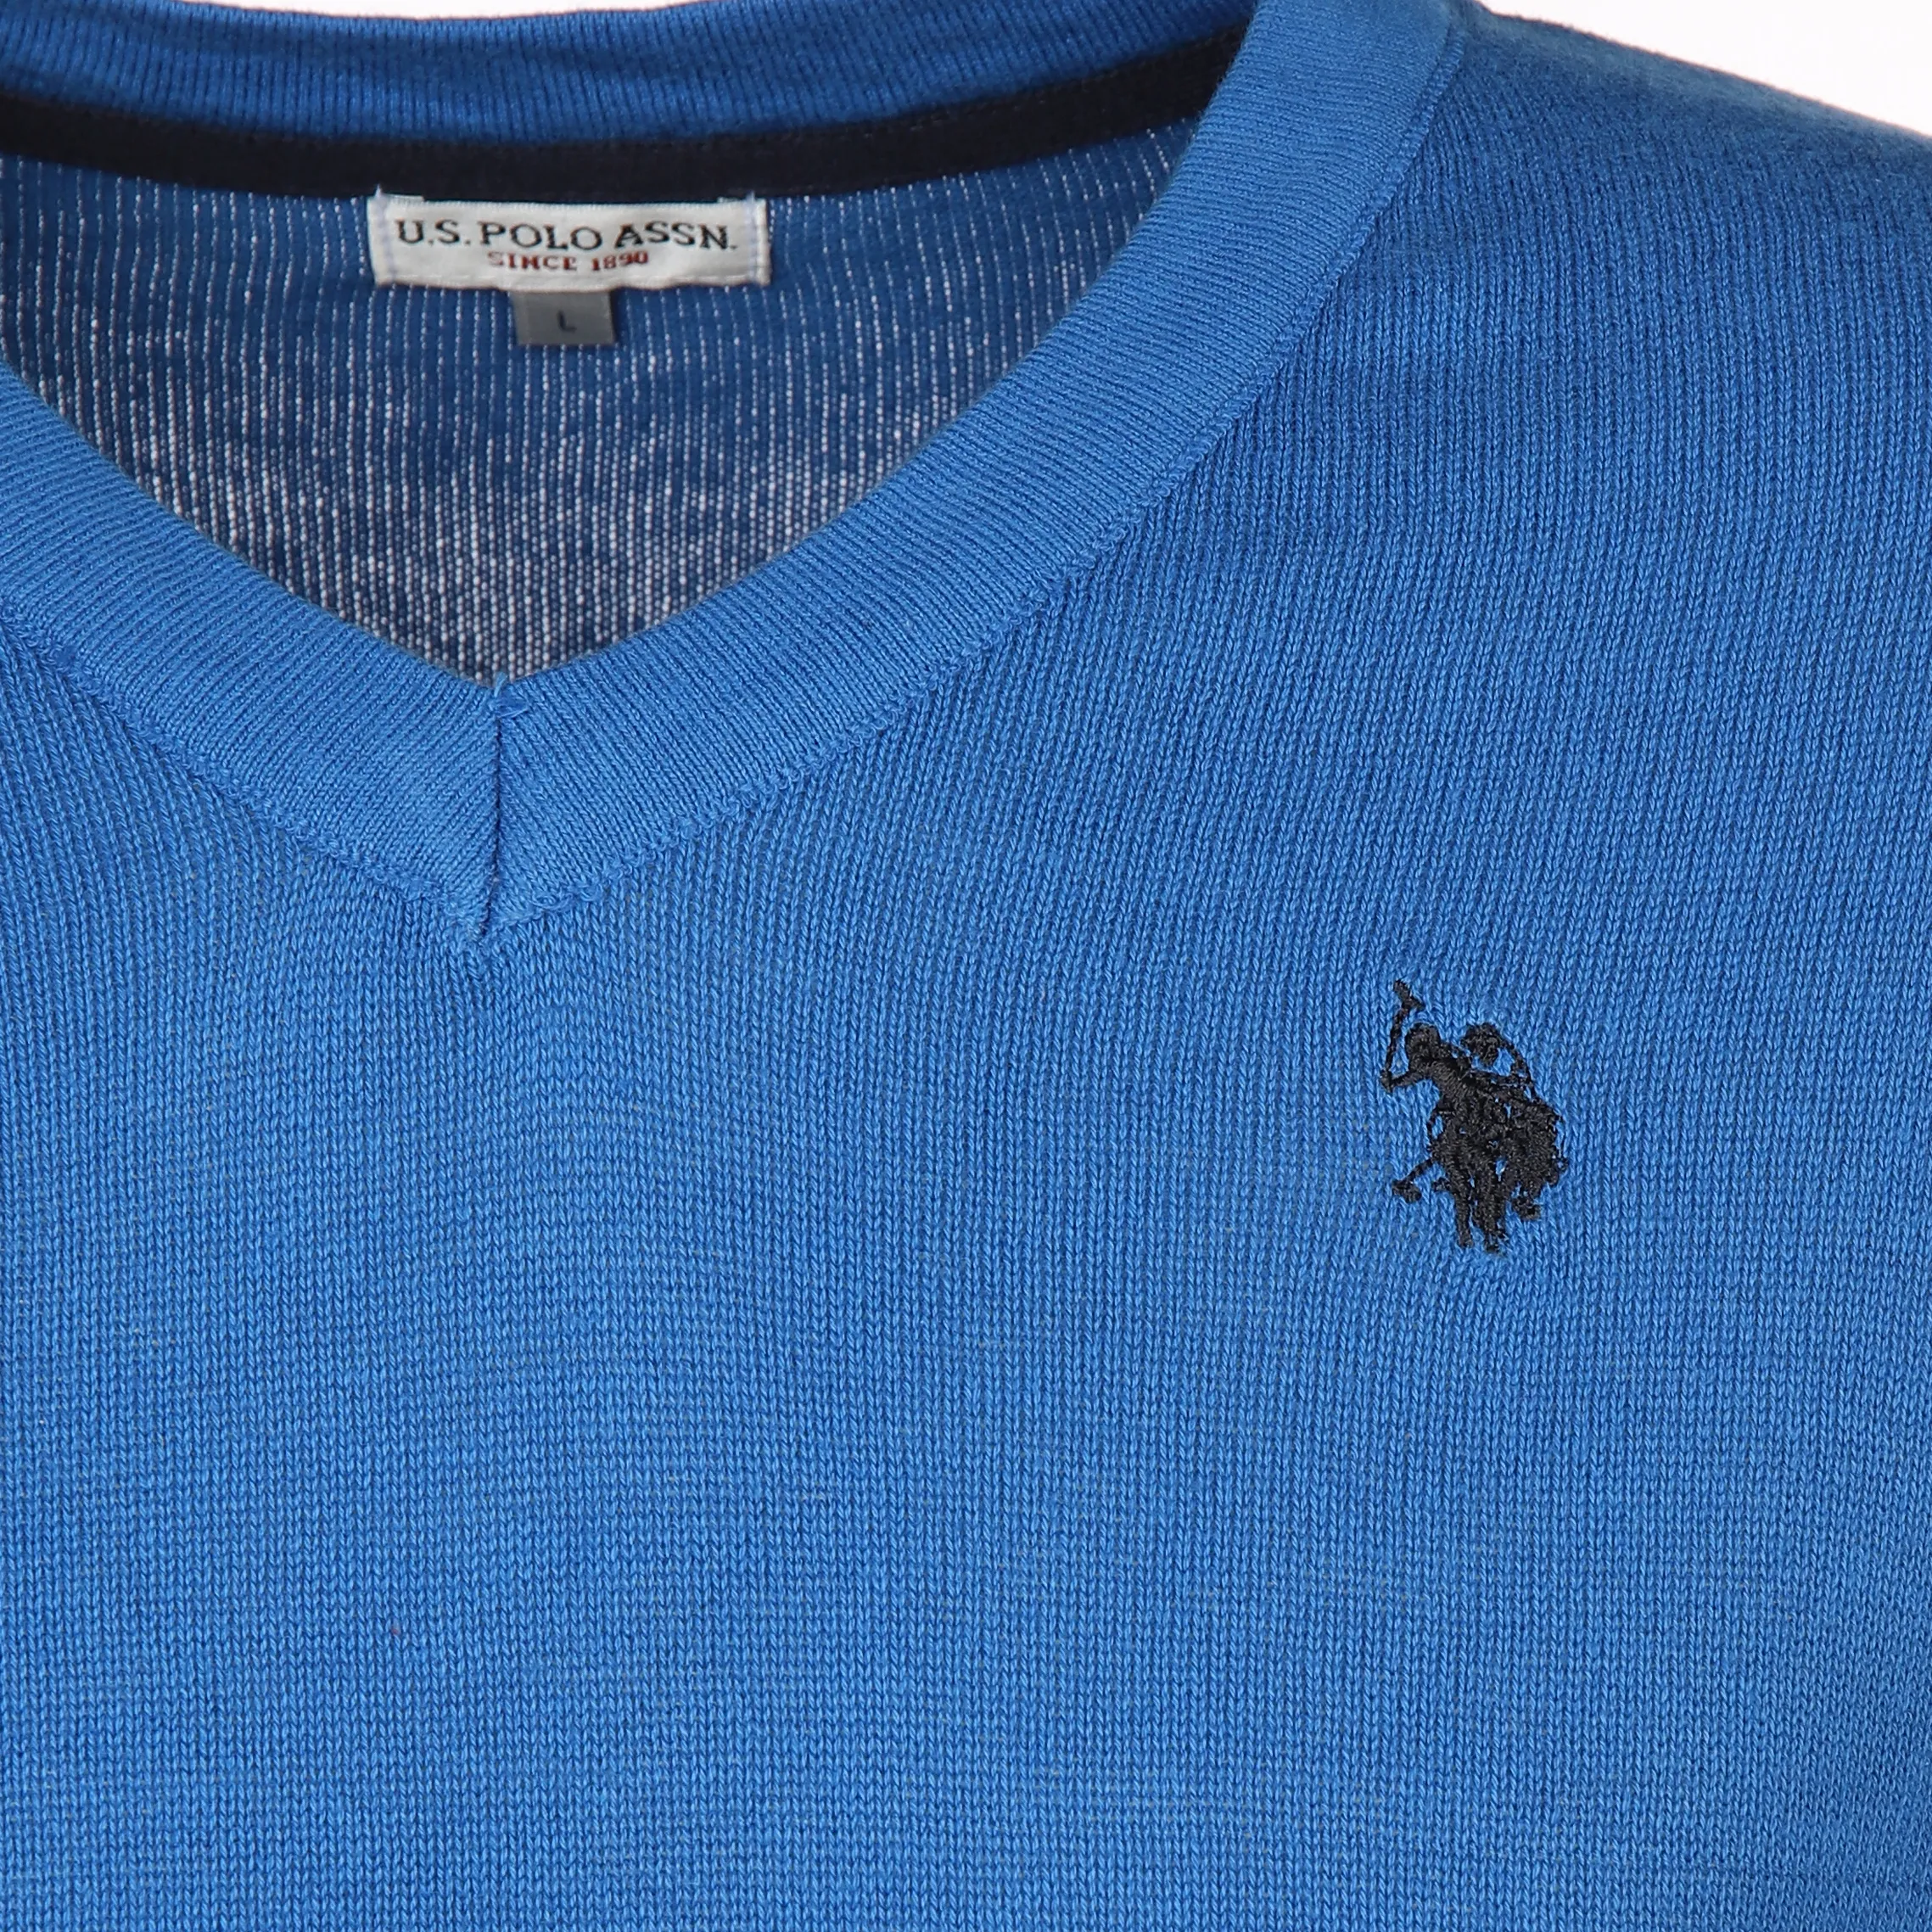 U.S. Polo Assn. He. Pullover V-Ausschnitt Blau 889560 BLAU 3